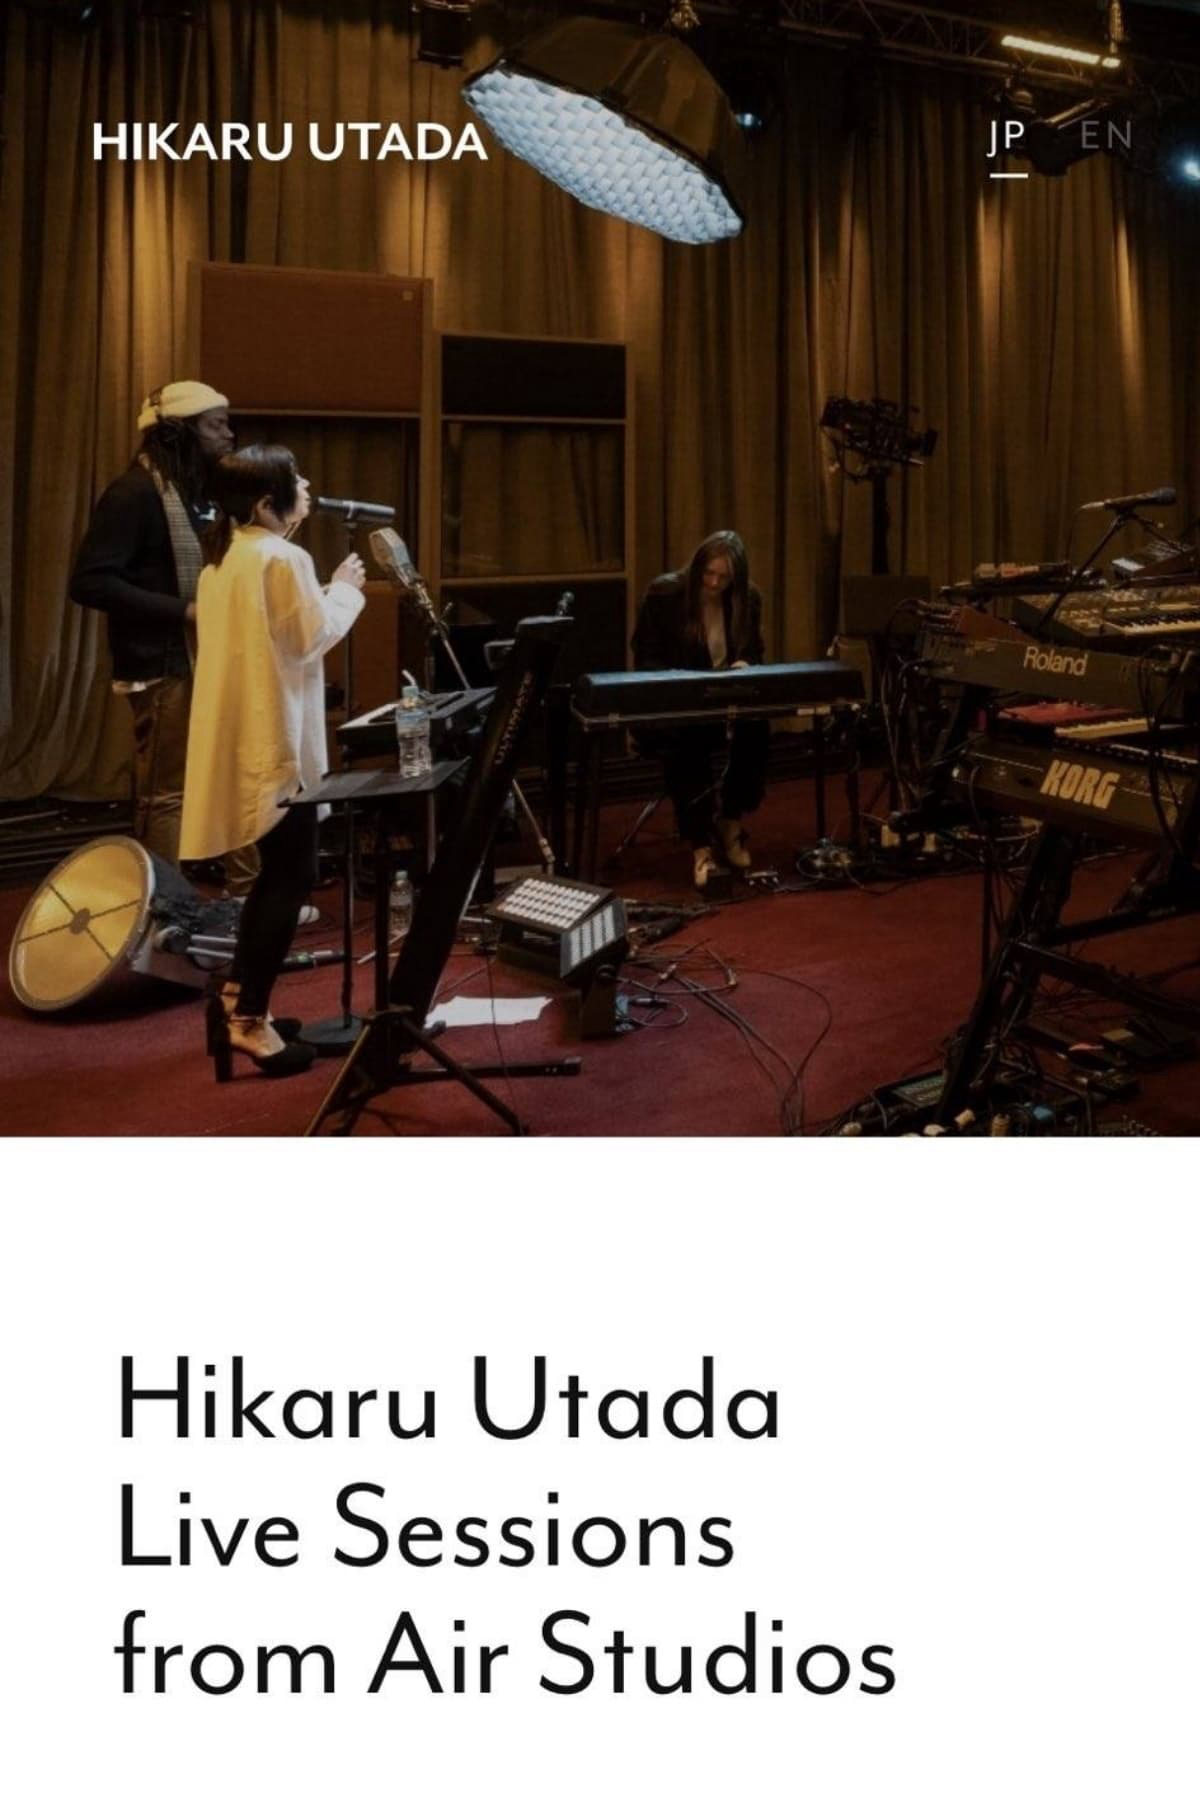 Utada Hikaru: Thu âm trực tiếp từ Air Studios - Hikaru Utada Live Sessions from AIR Studios